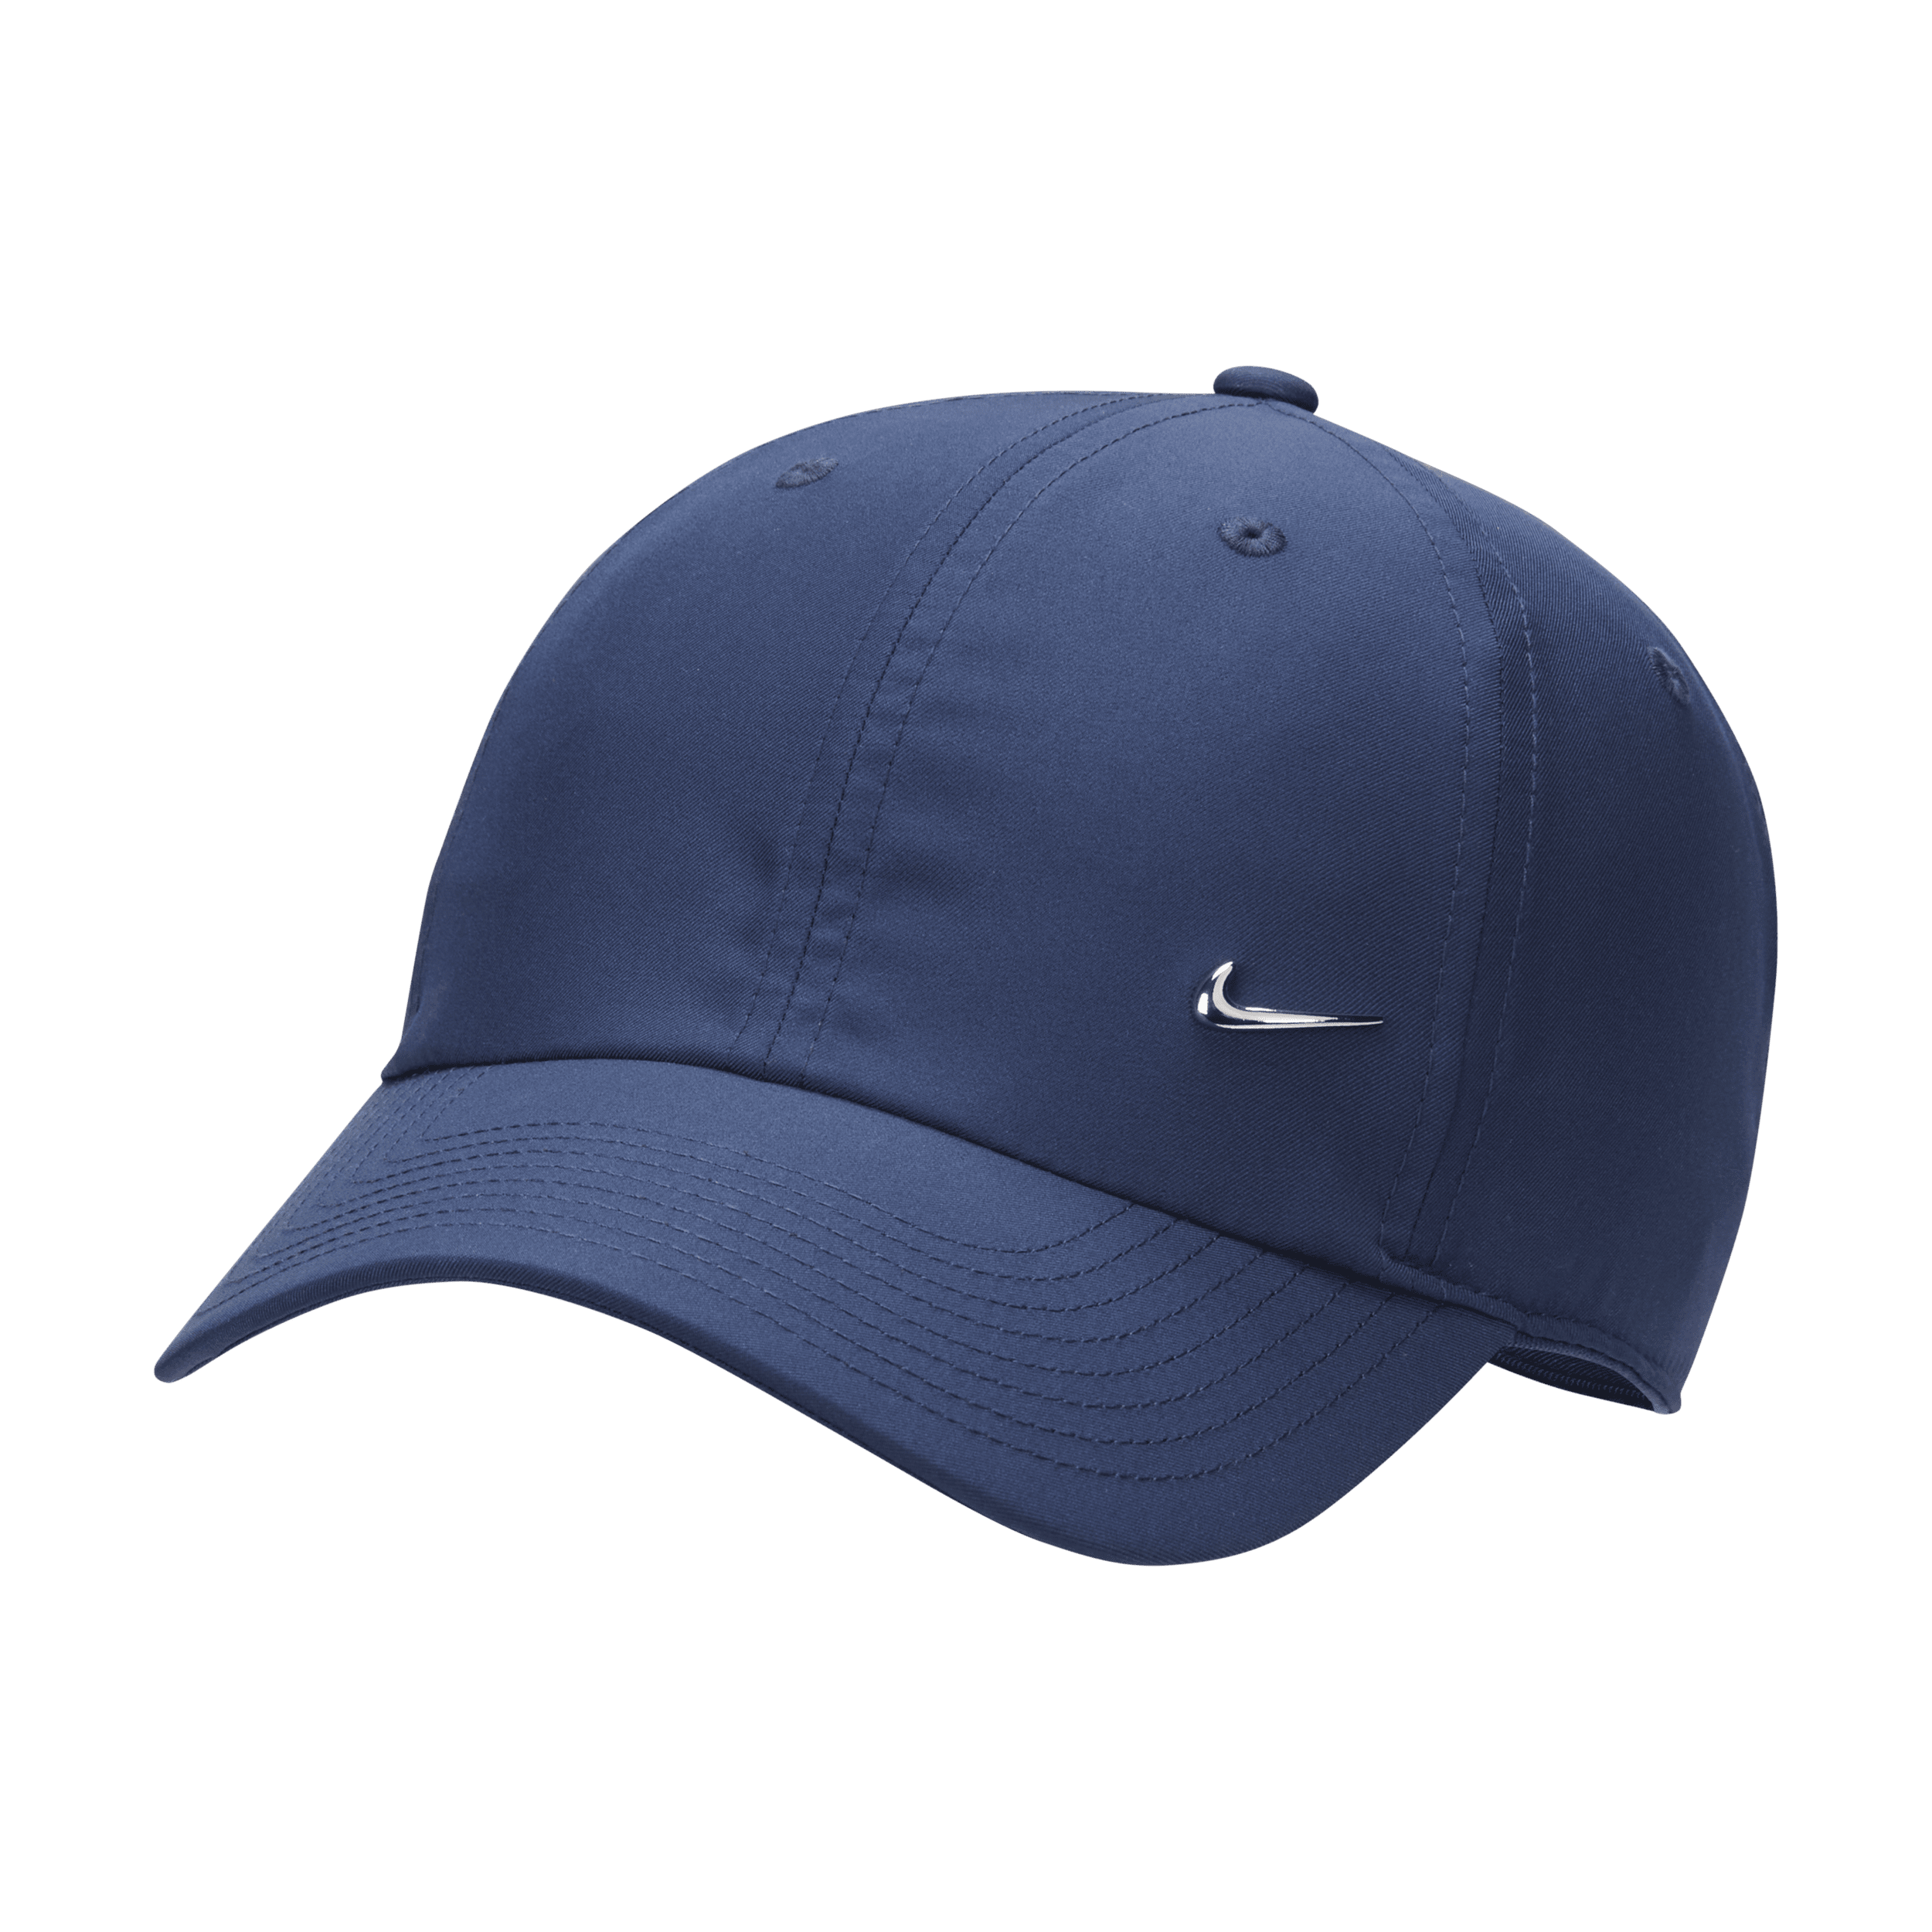 Nike Dri-FIT Club Gorra sin estructura con logotipo Swoosh metálico - Azul